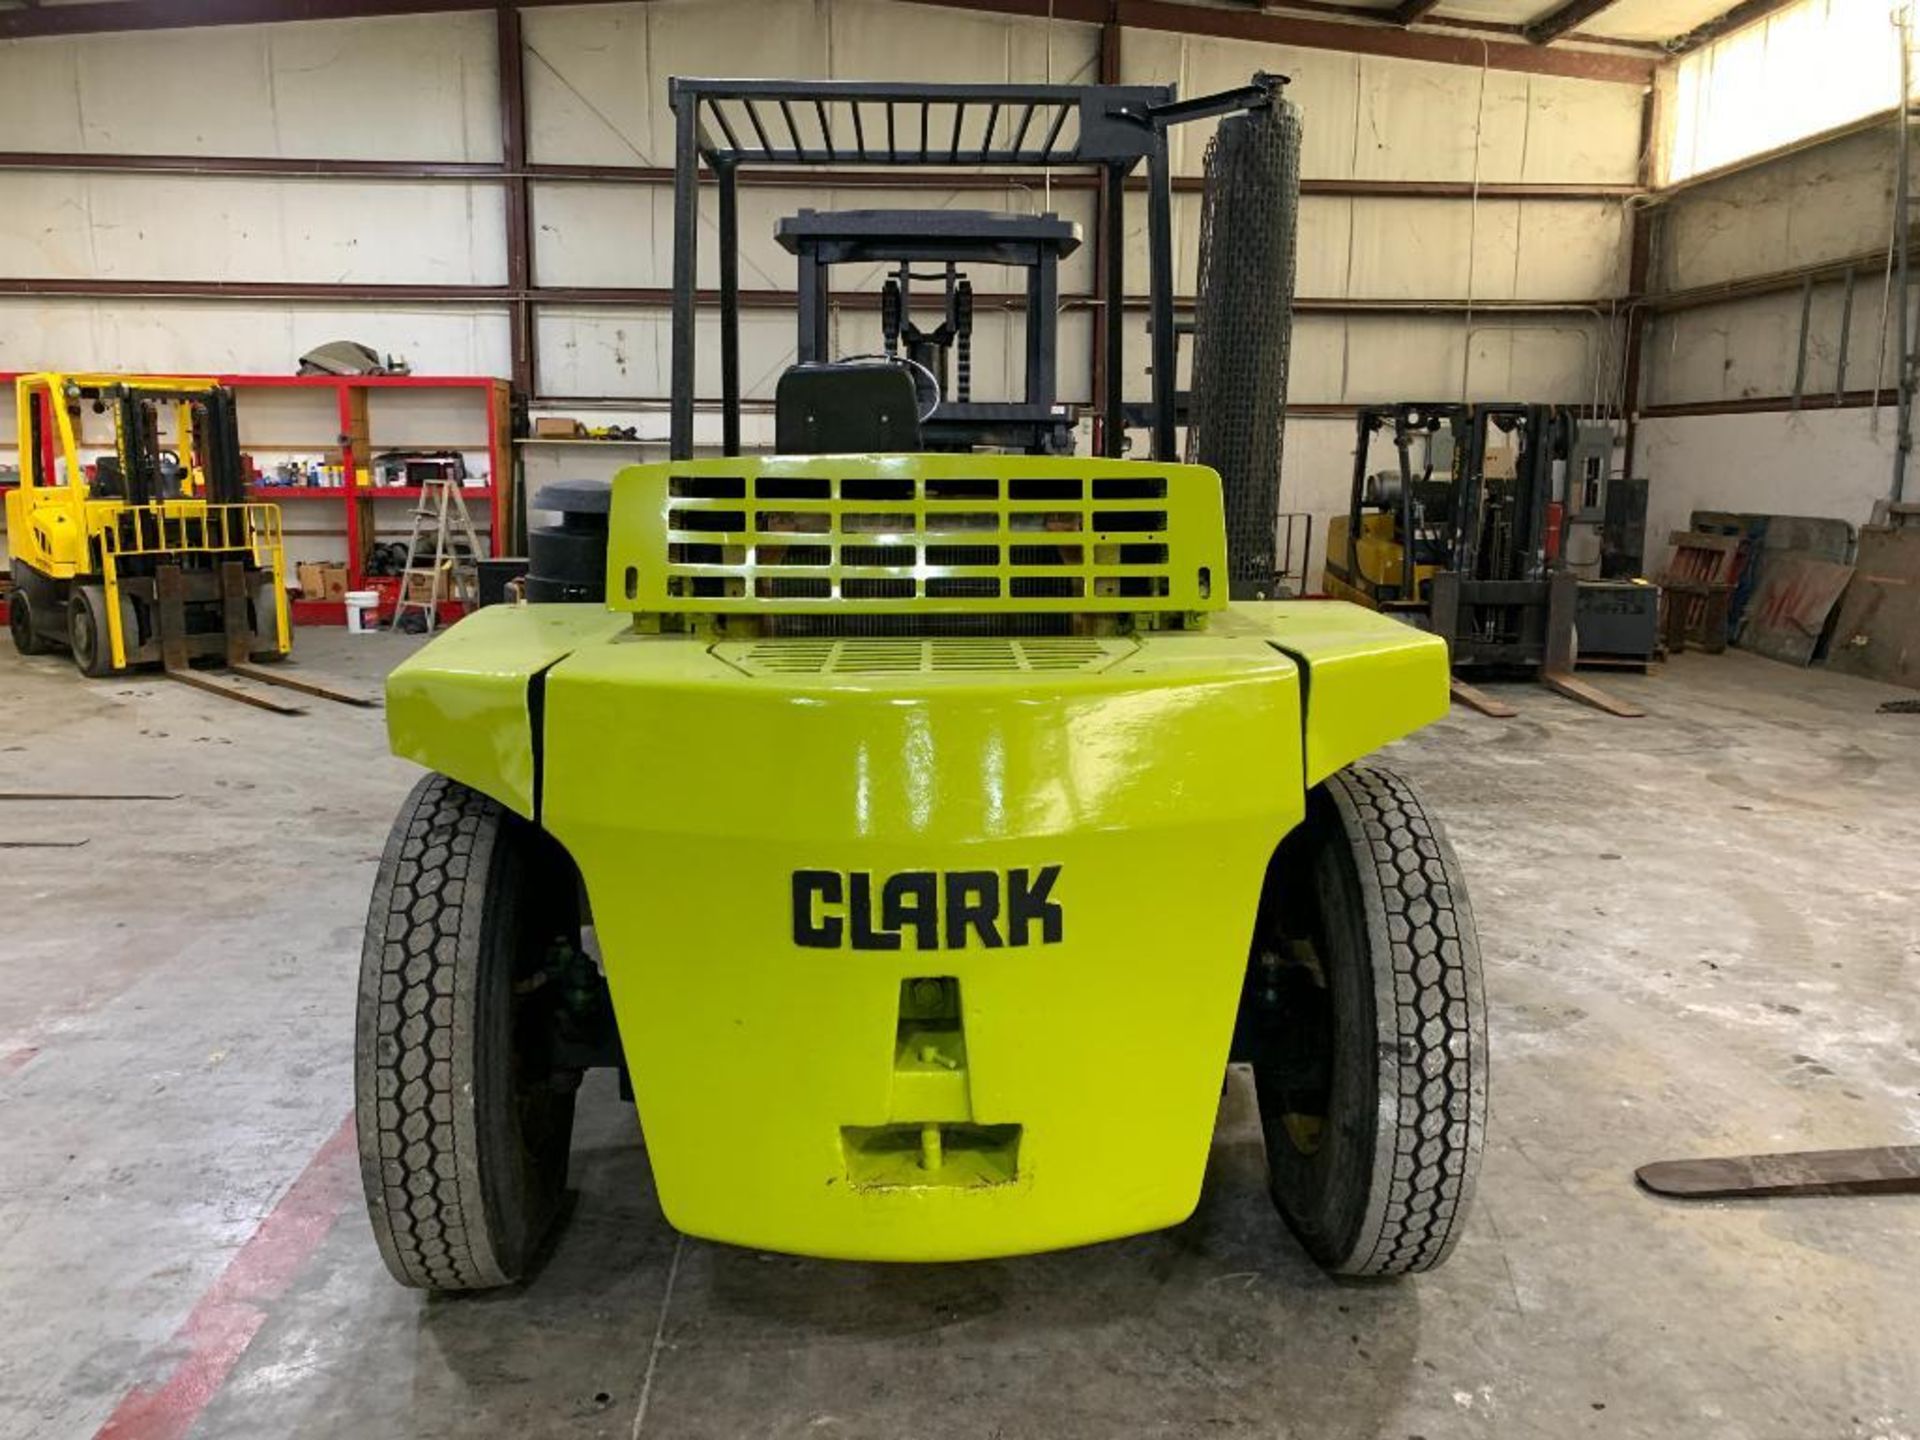 Clark 18,000 lb. capacity forklift, model c500-ys180, s/n y1625t74051050, diesel, 2-speed lever shif - Image 5 of 11